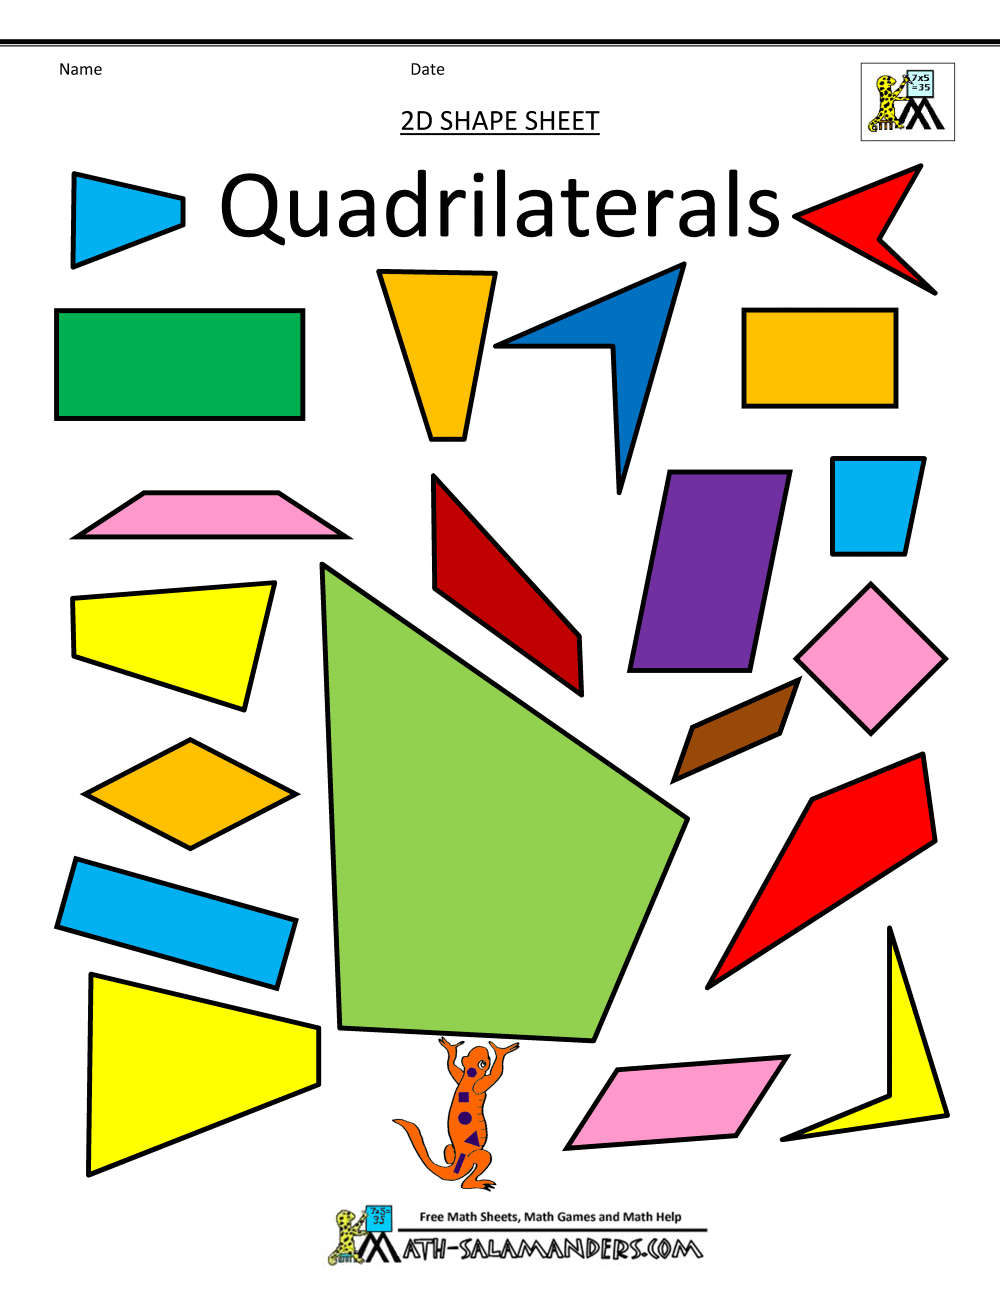 quadrilaterals clipart - photo #1